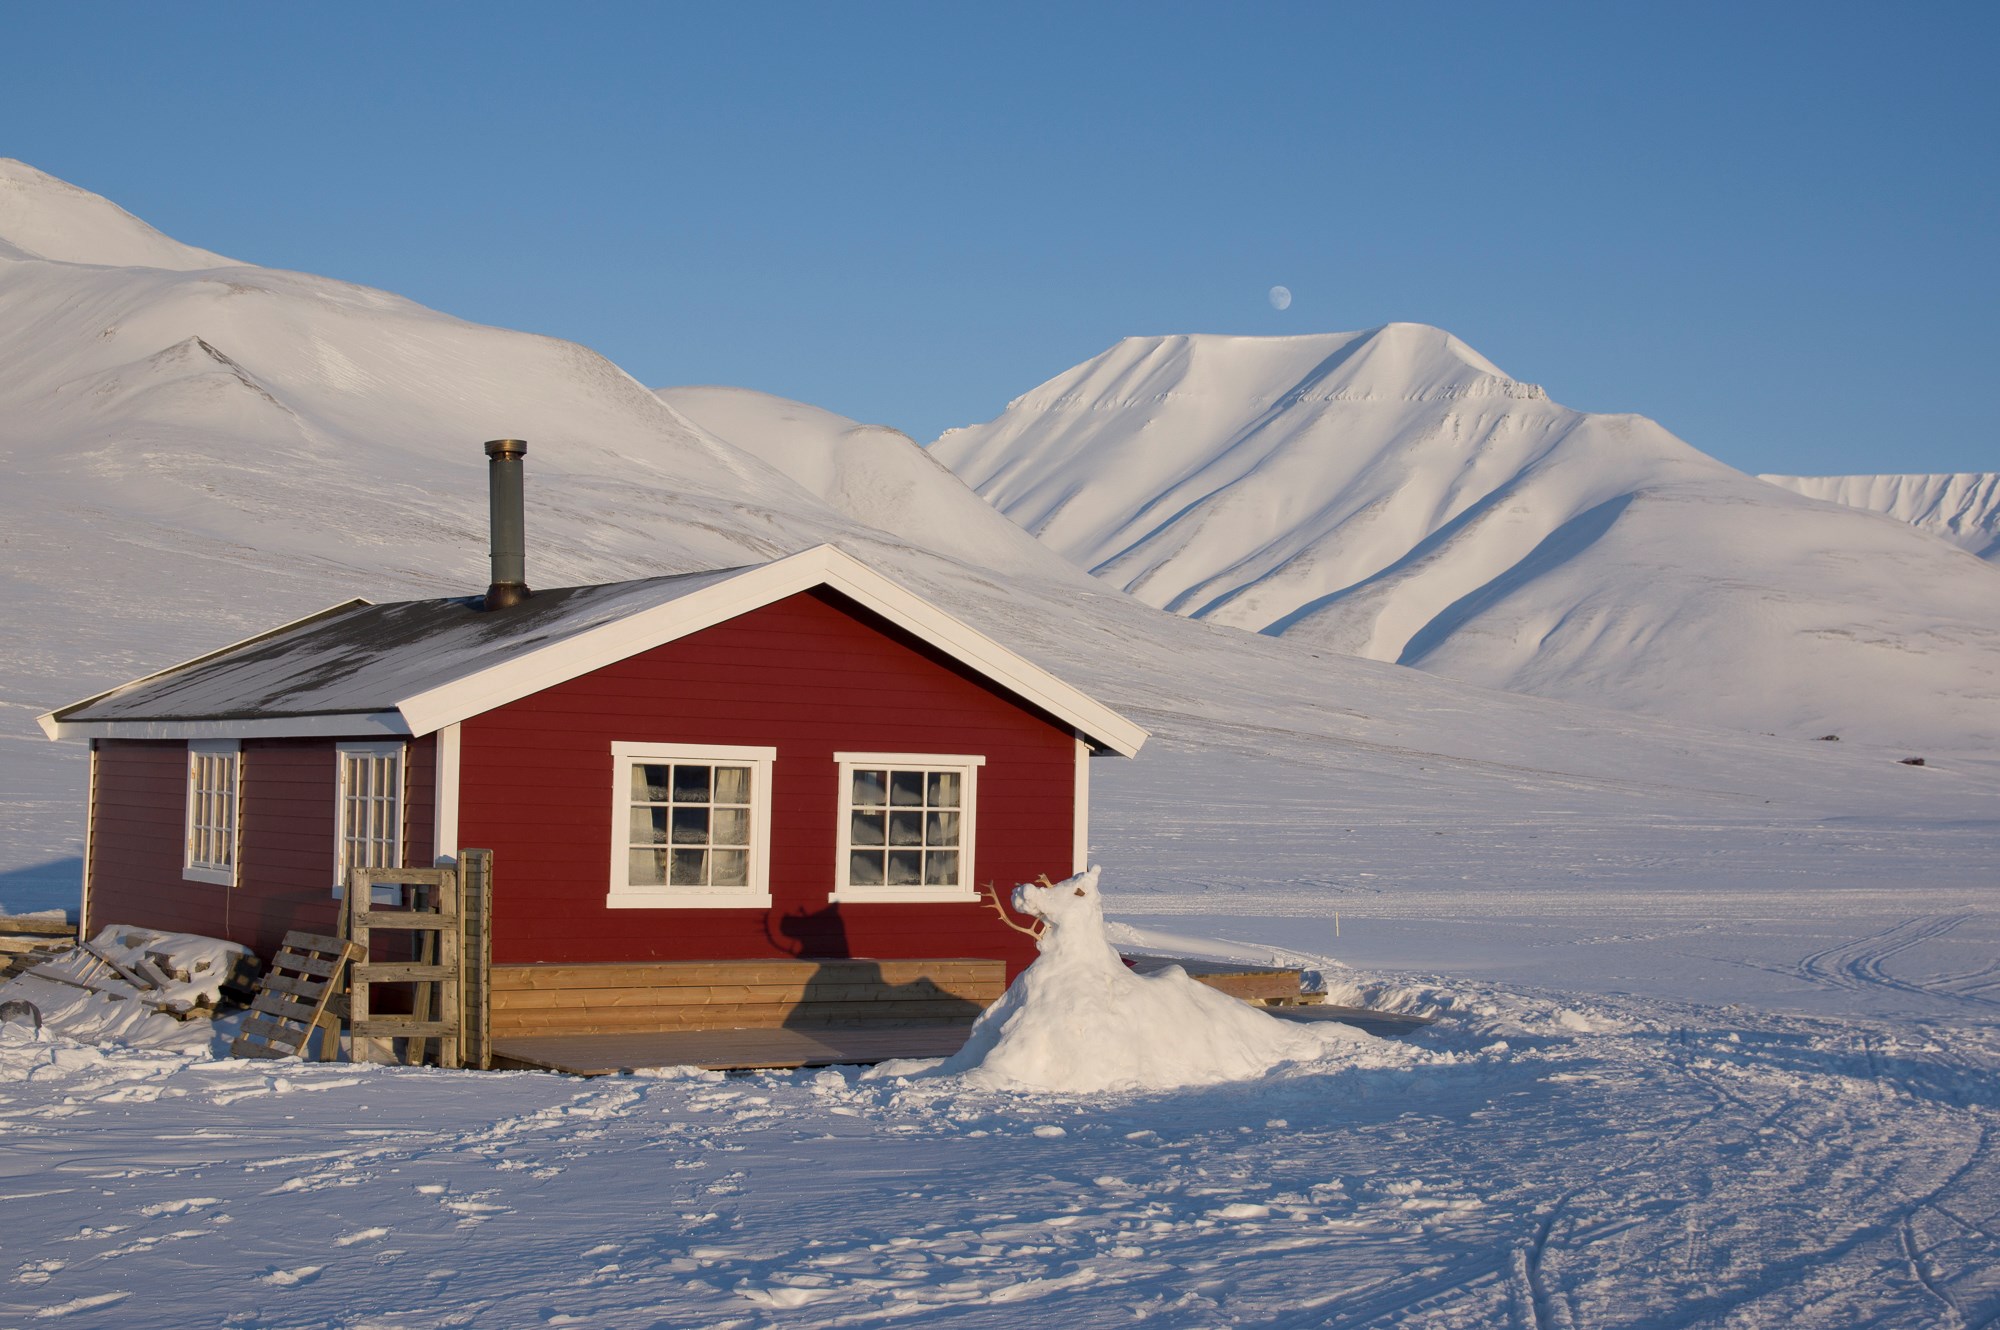 Drywood skal "teste" maling i arktis - Drywood_Svalbard (1 of 1).jpg - rubs